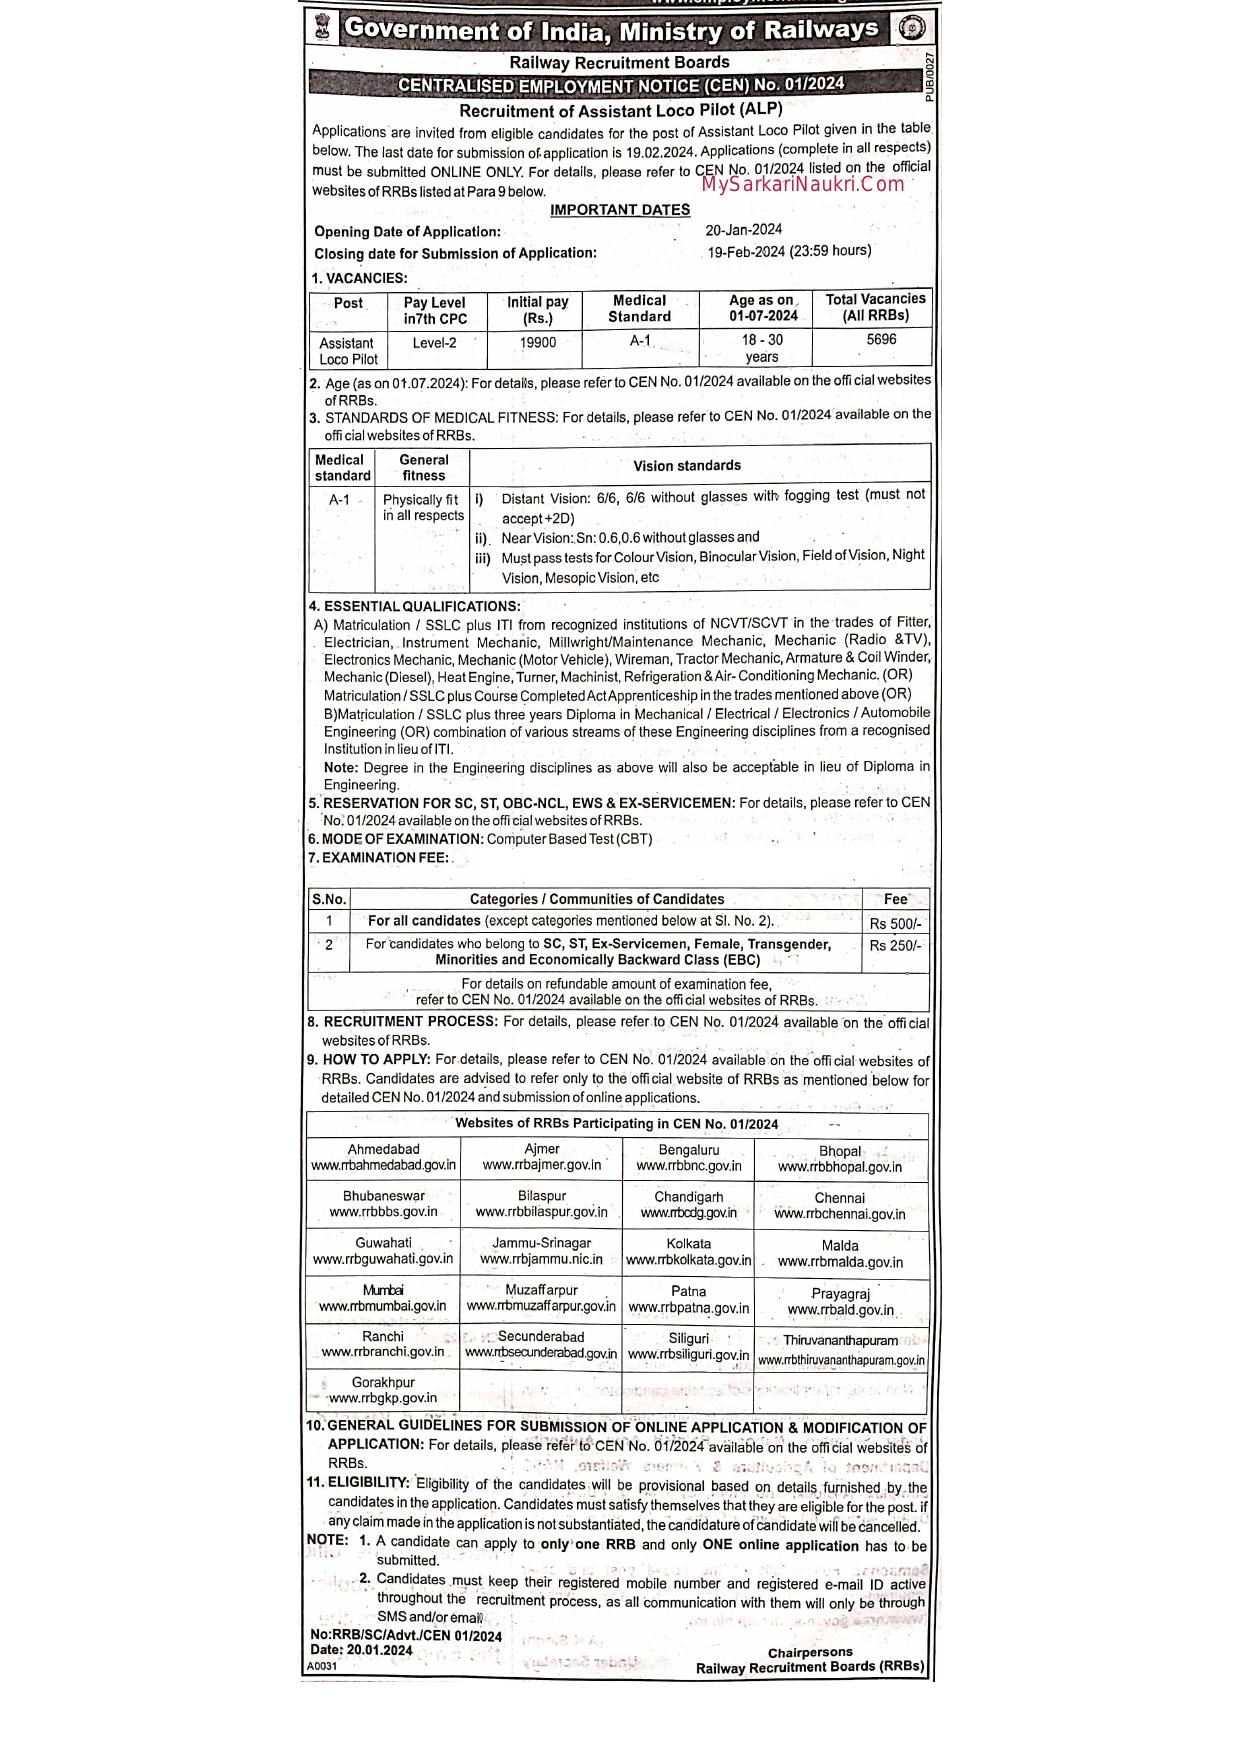 Railway Recruitment Board (RRB) Assistant Loco Pilot (ALP) Recruitment 2024 - Page 1